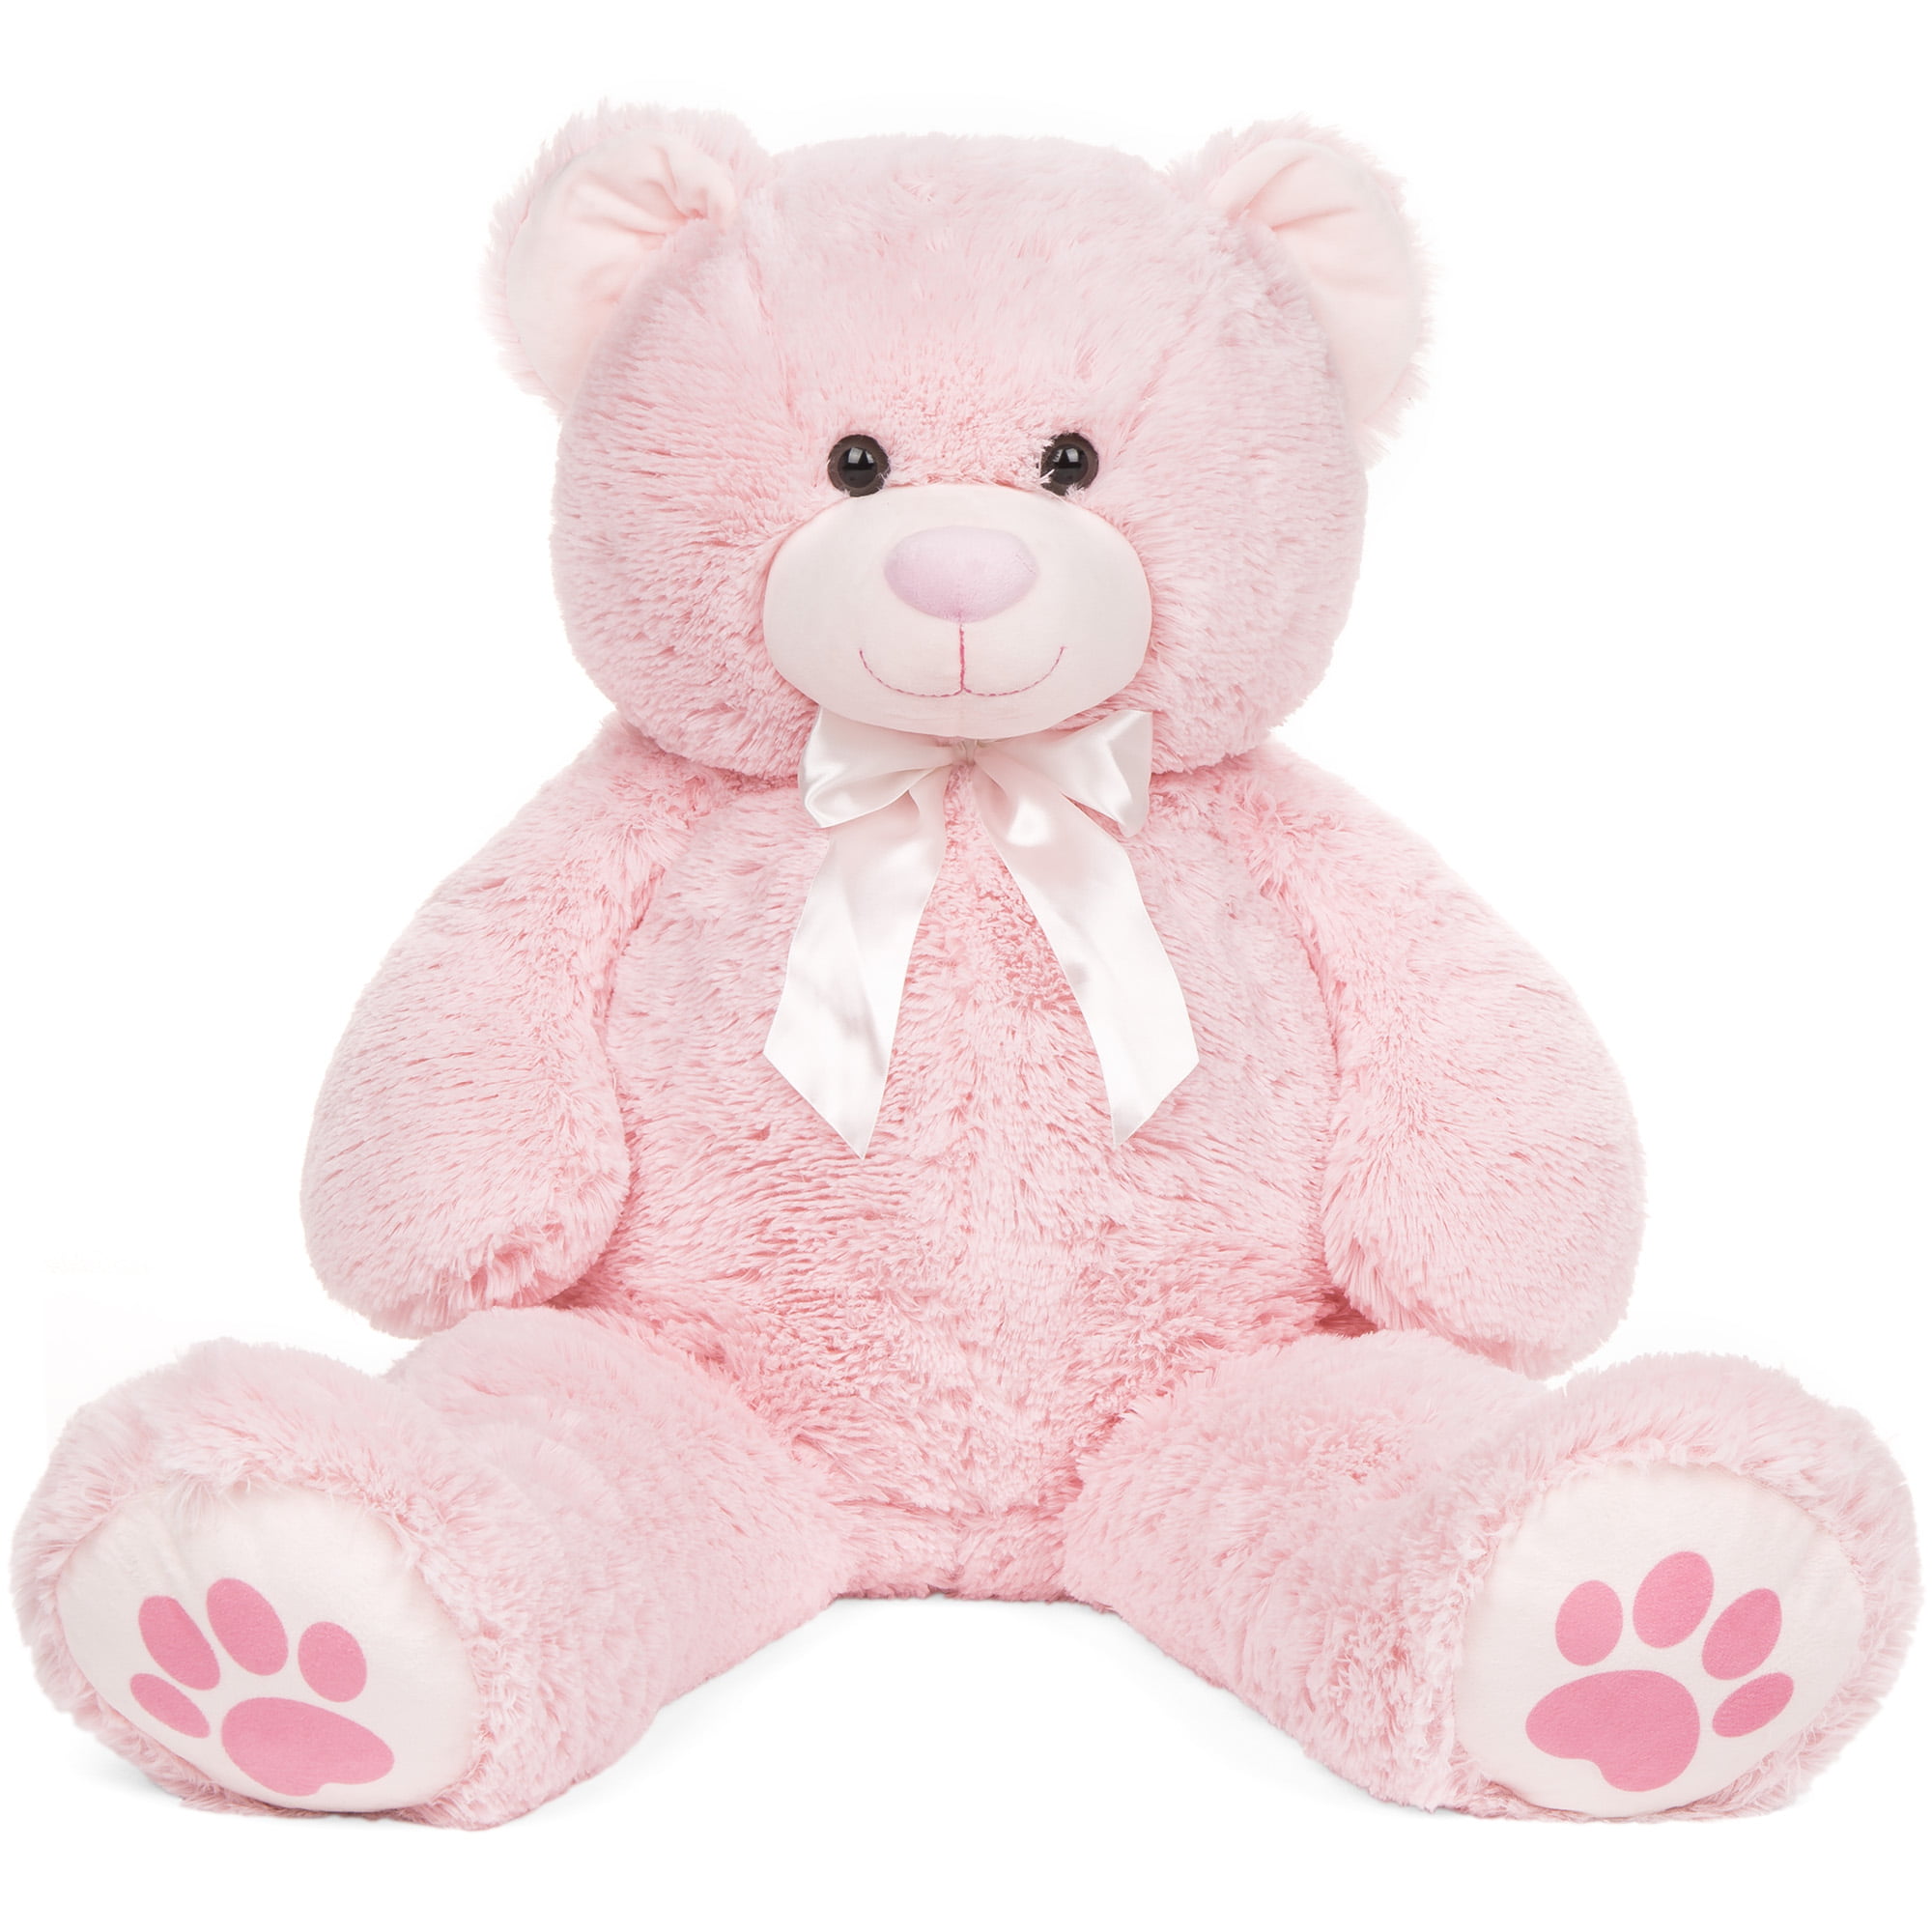 teddy bears stuffed animals toys